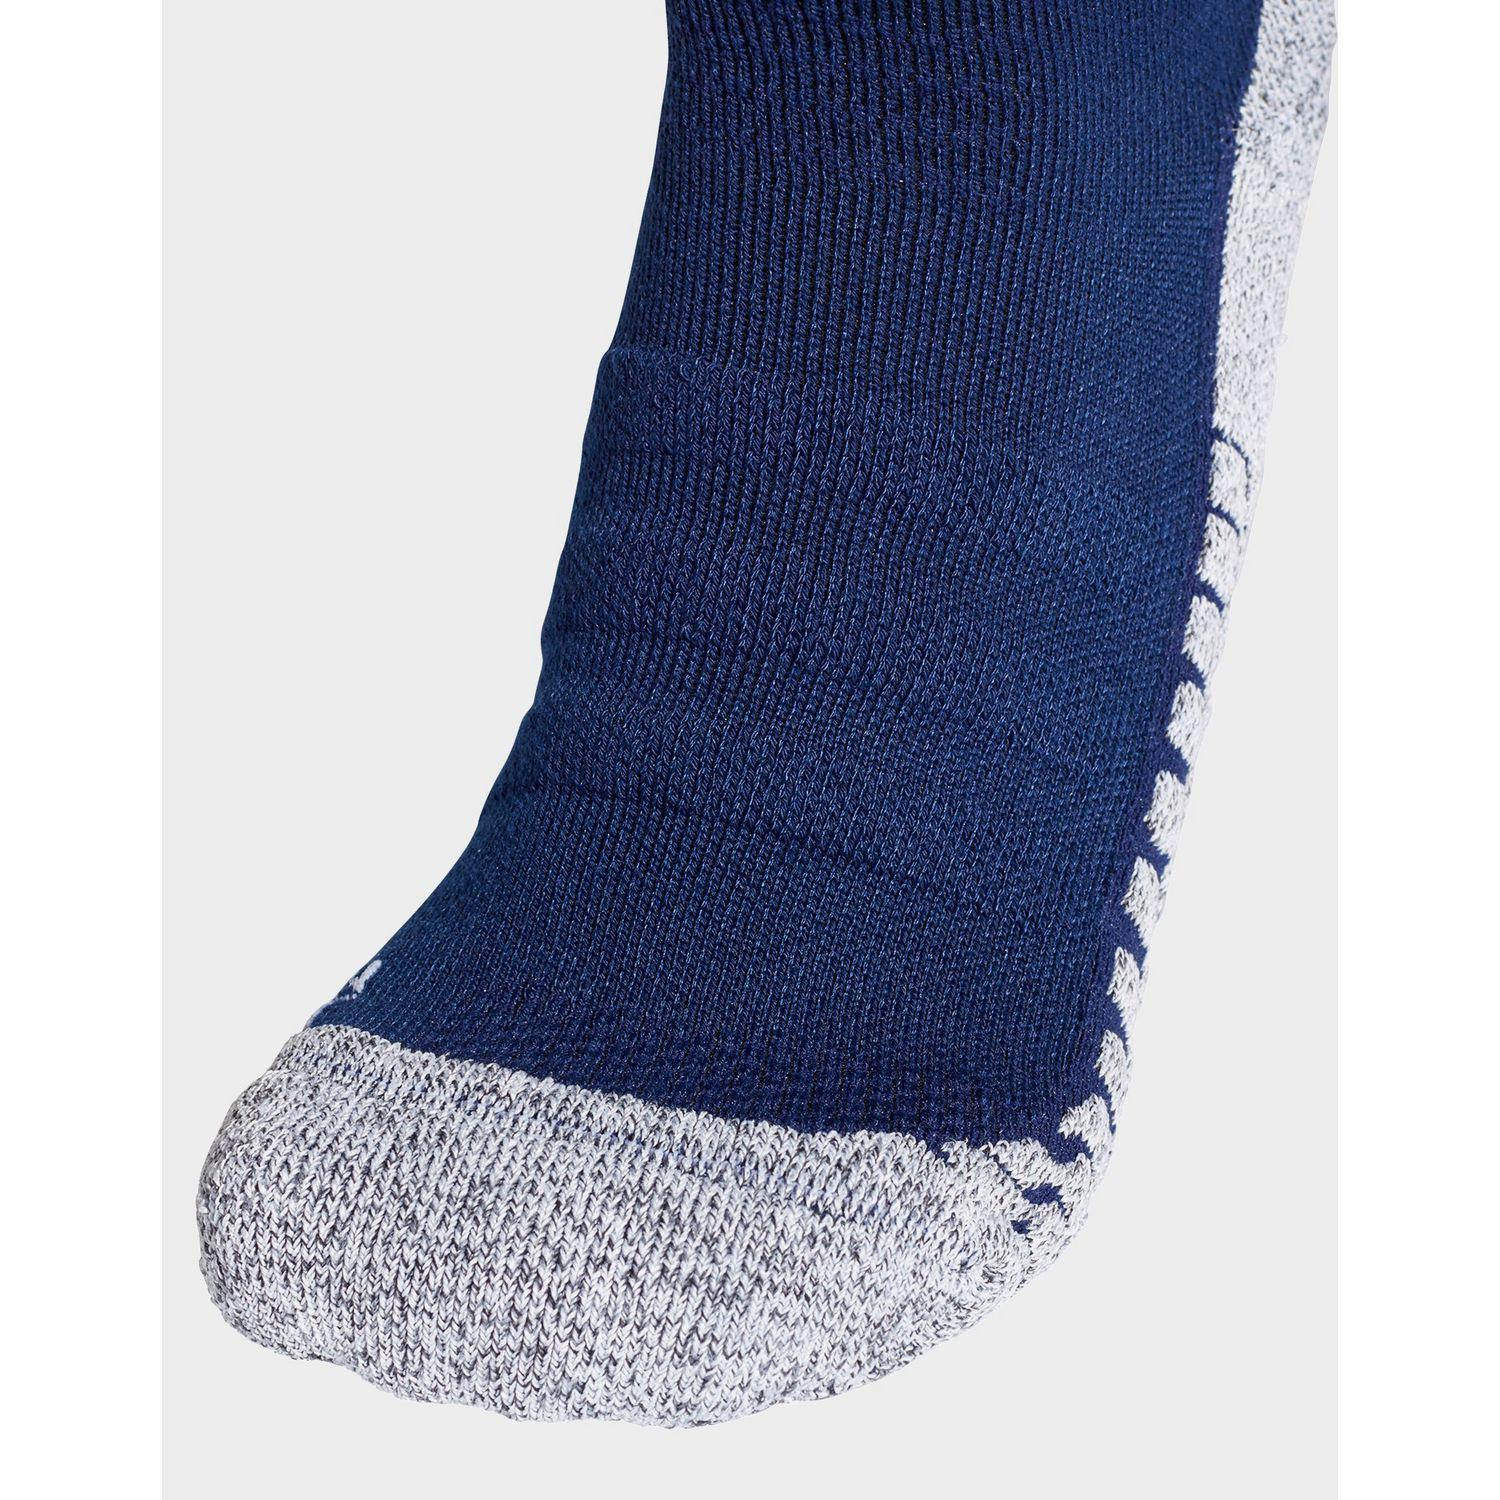 adidas alphaskin traxion socks for Sale OFF 66%